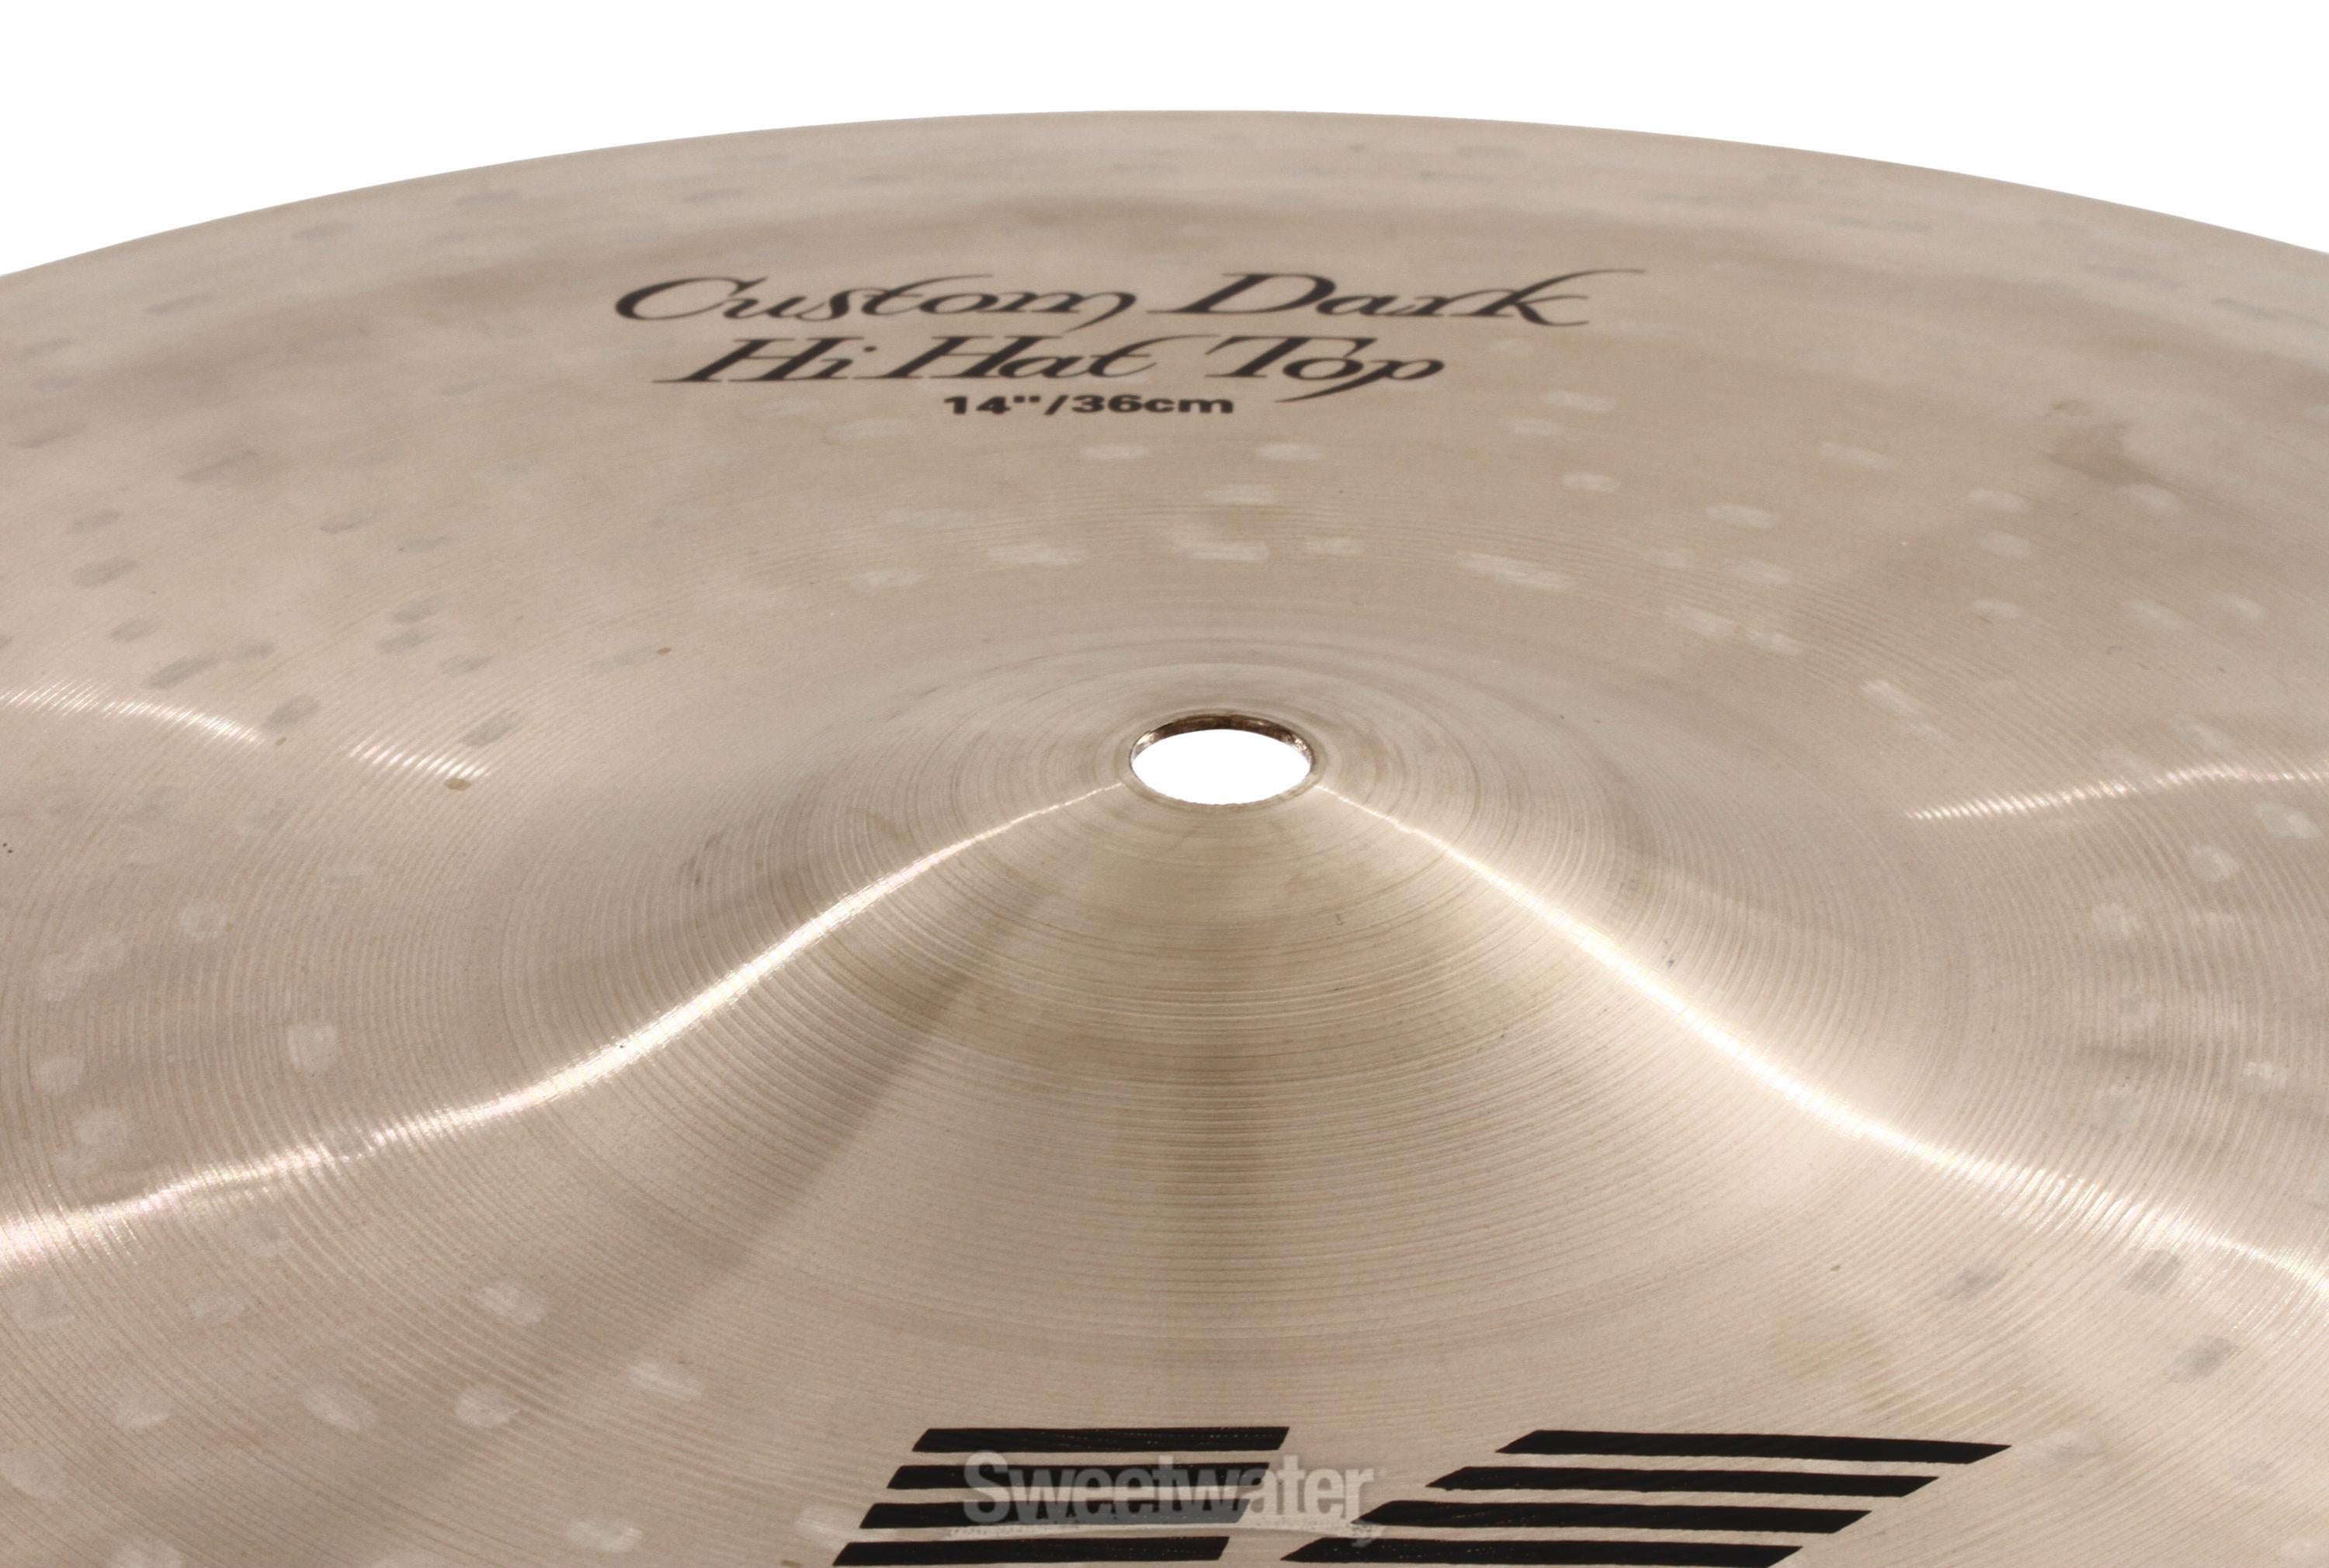 Zildjian K Custom Dark Hi-hat Cymbals - 14 inch